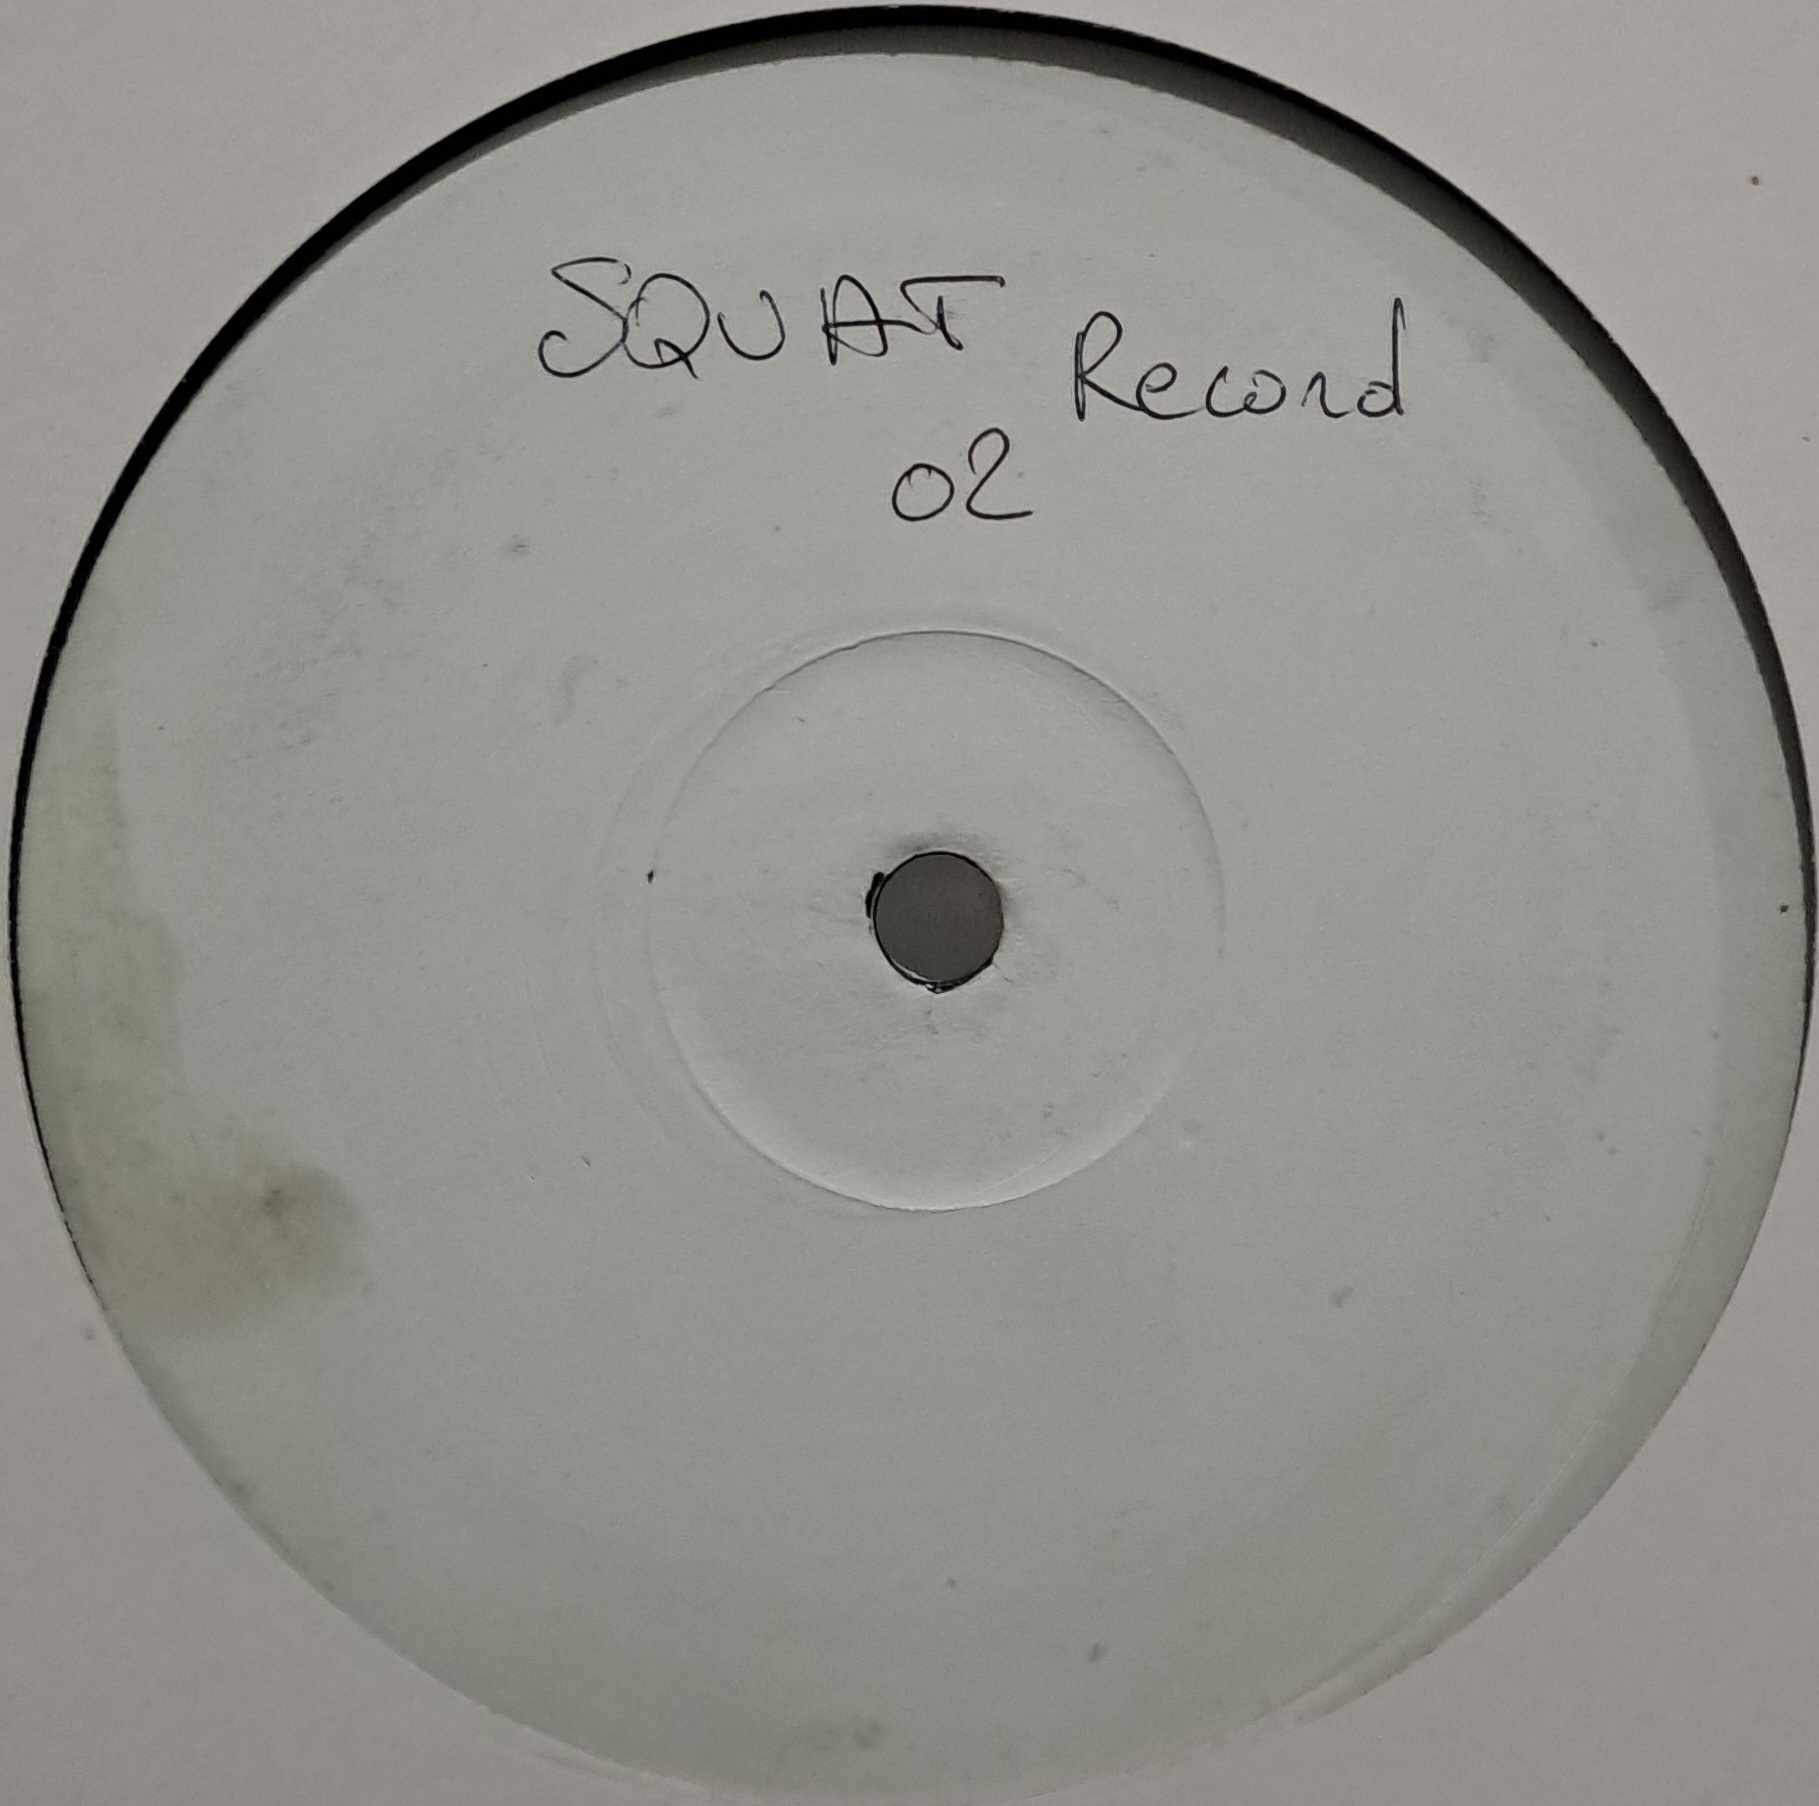 Squat Records 02 (White Label) - vinyle techno